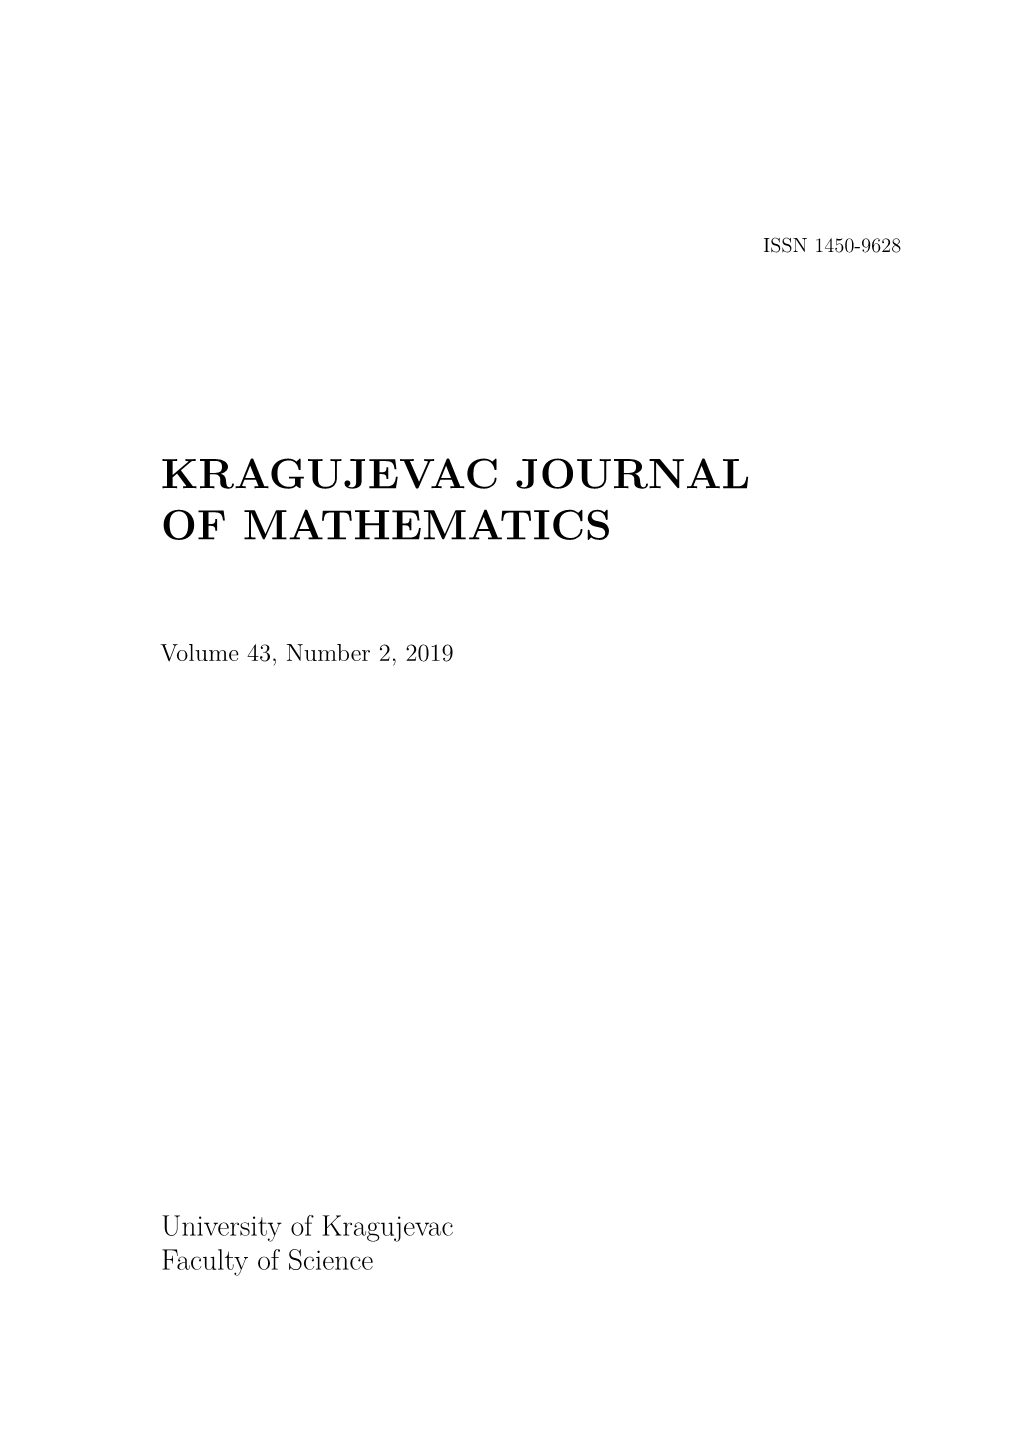 Kragujevac Journal of Mathematics